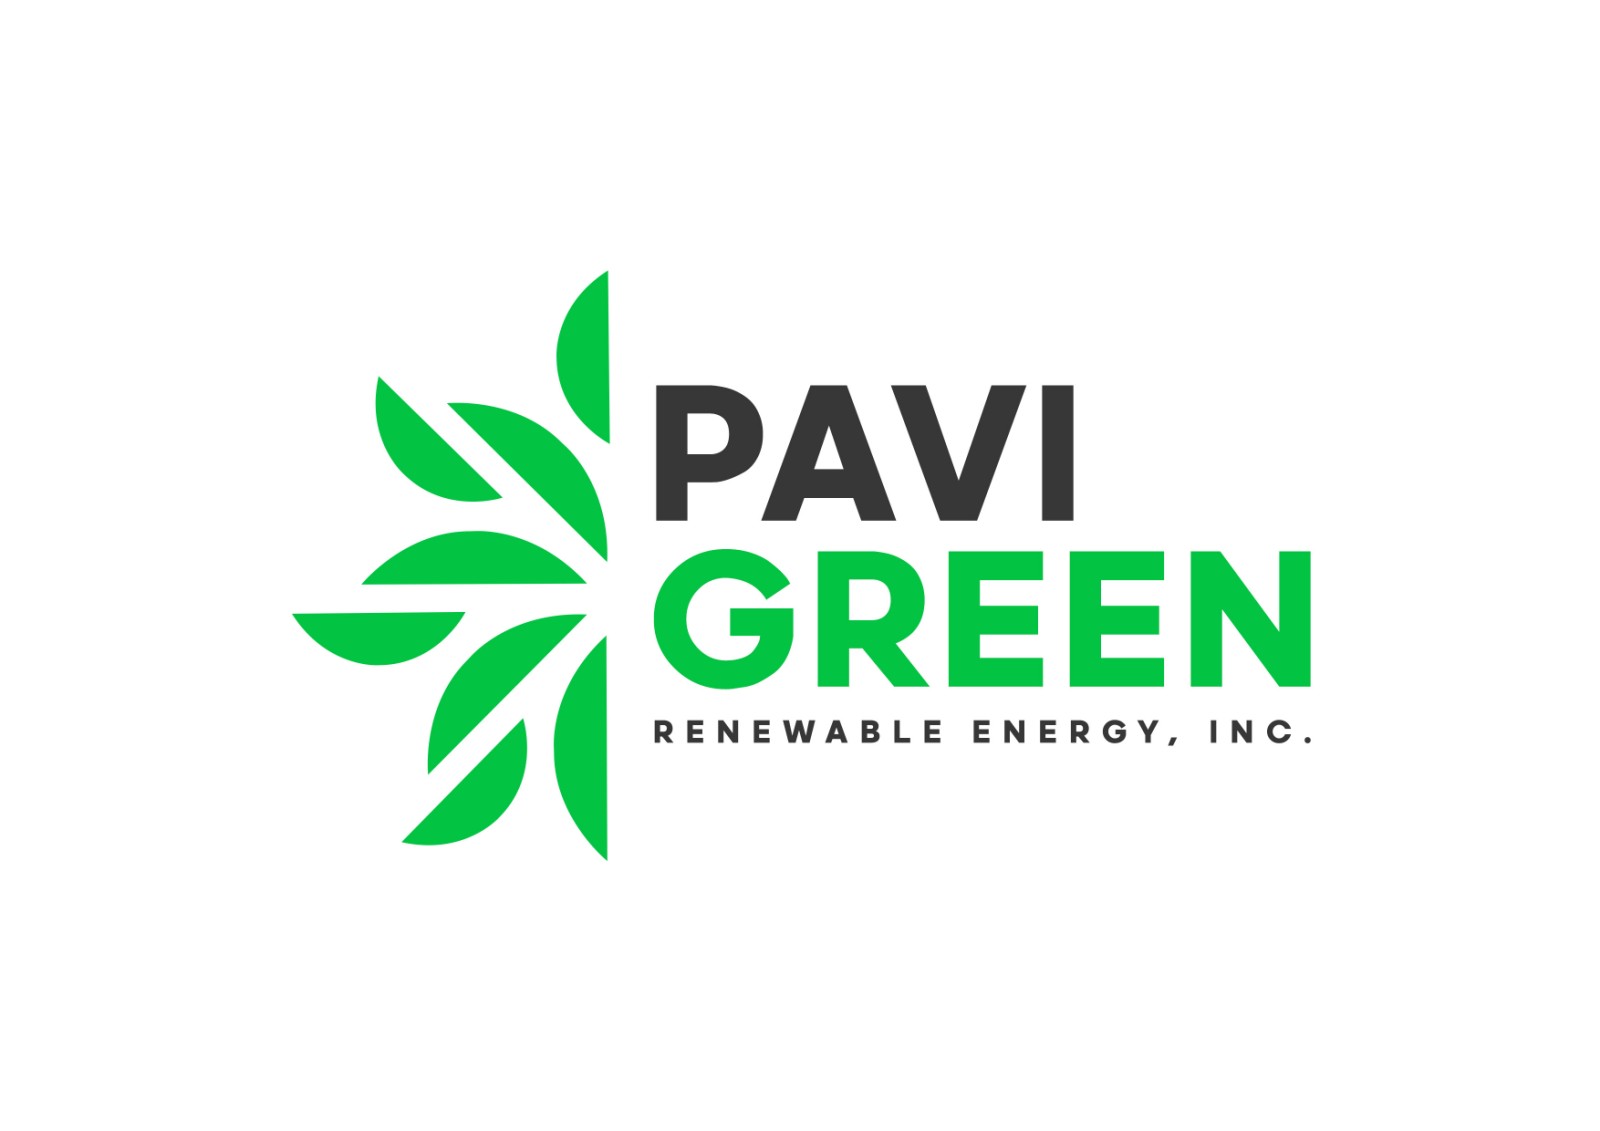 PAVI Green Renewable Energy Inc.